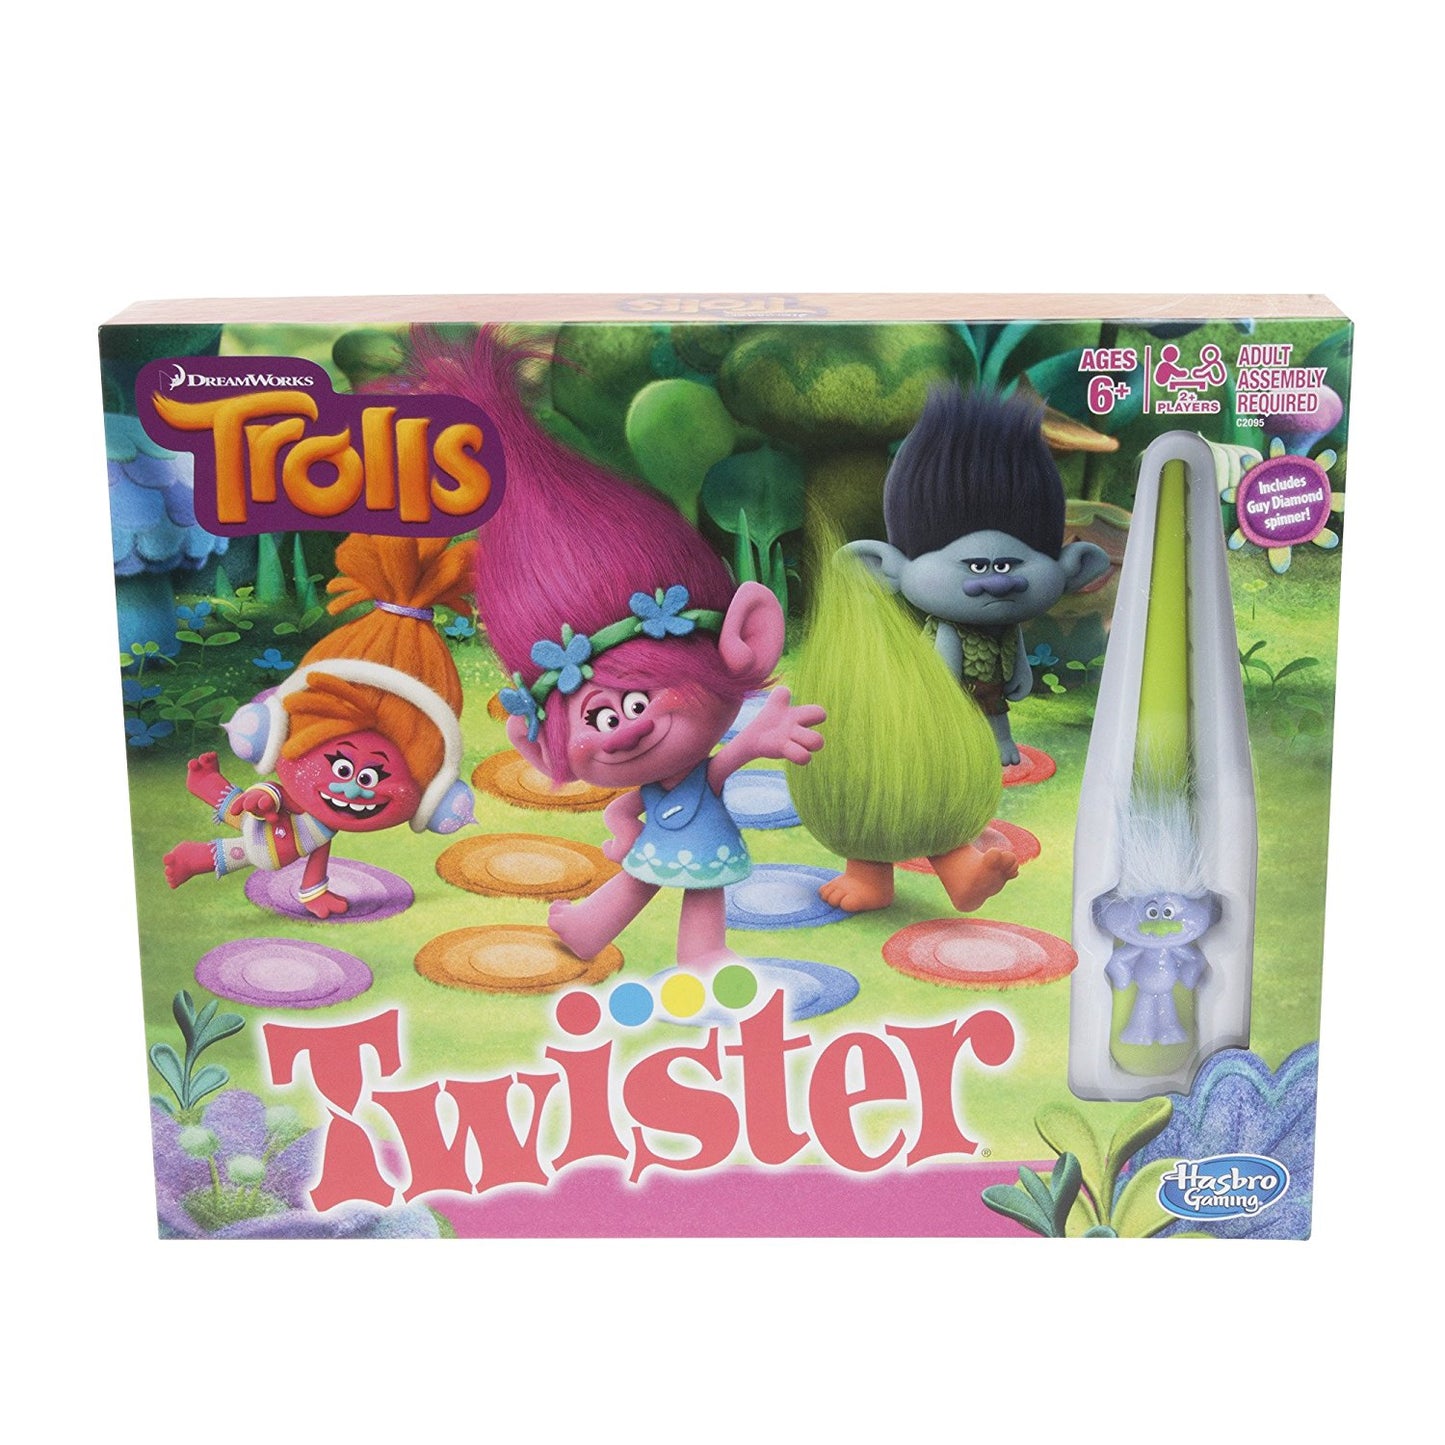 Trolls Twister Game